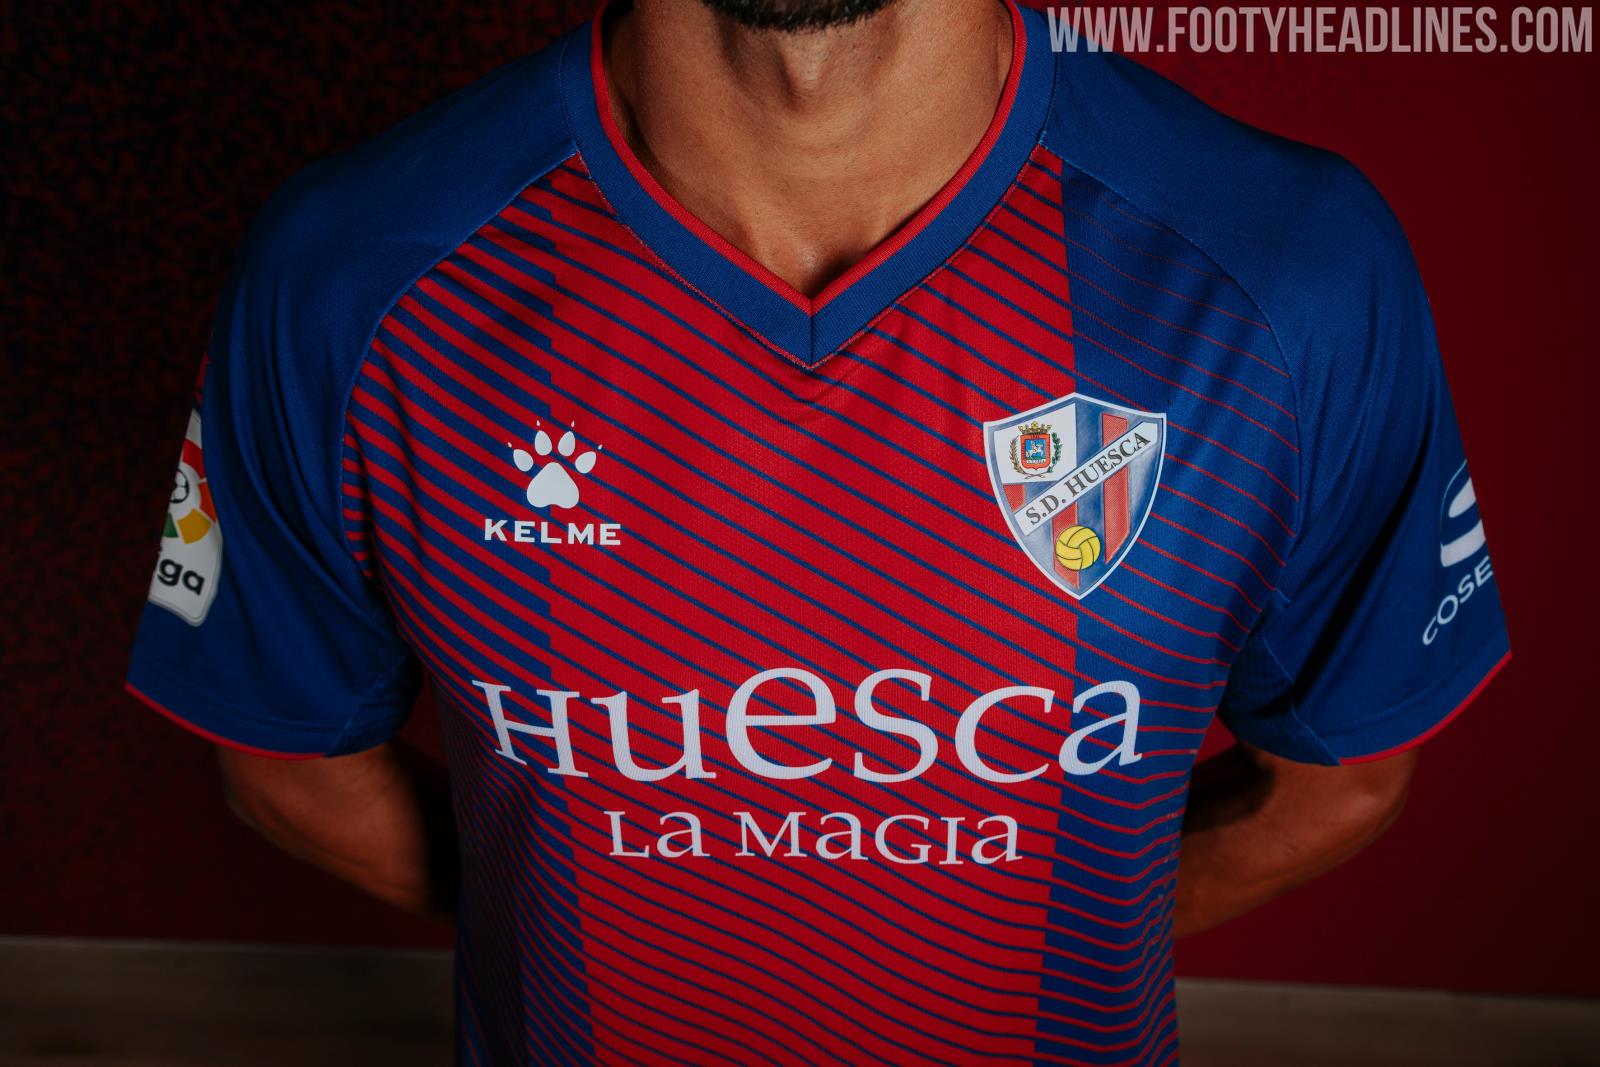 Huesca 19-20 Home, Away & Third Kits Released - Footy Headlines